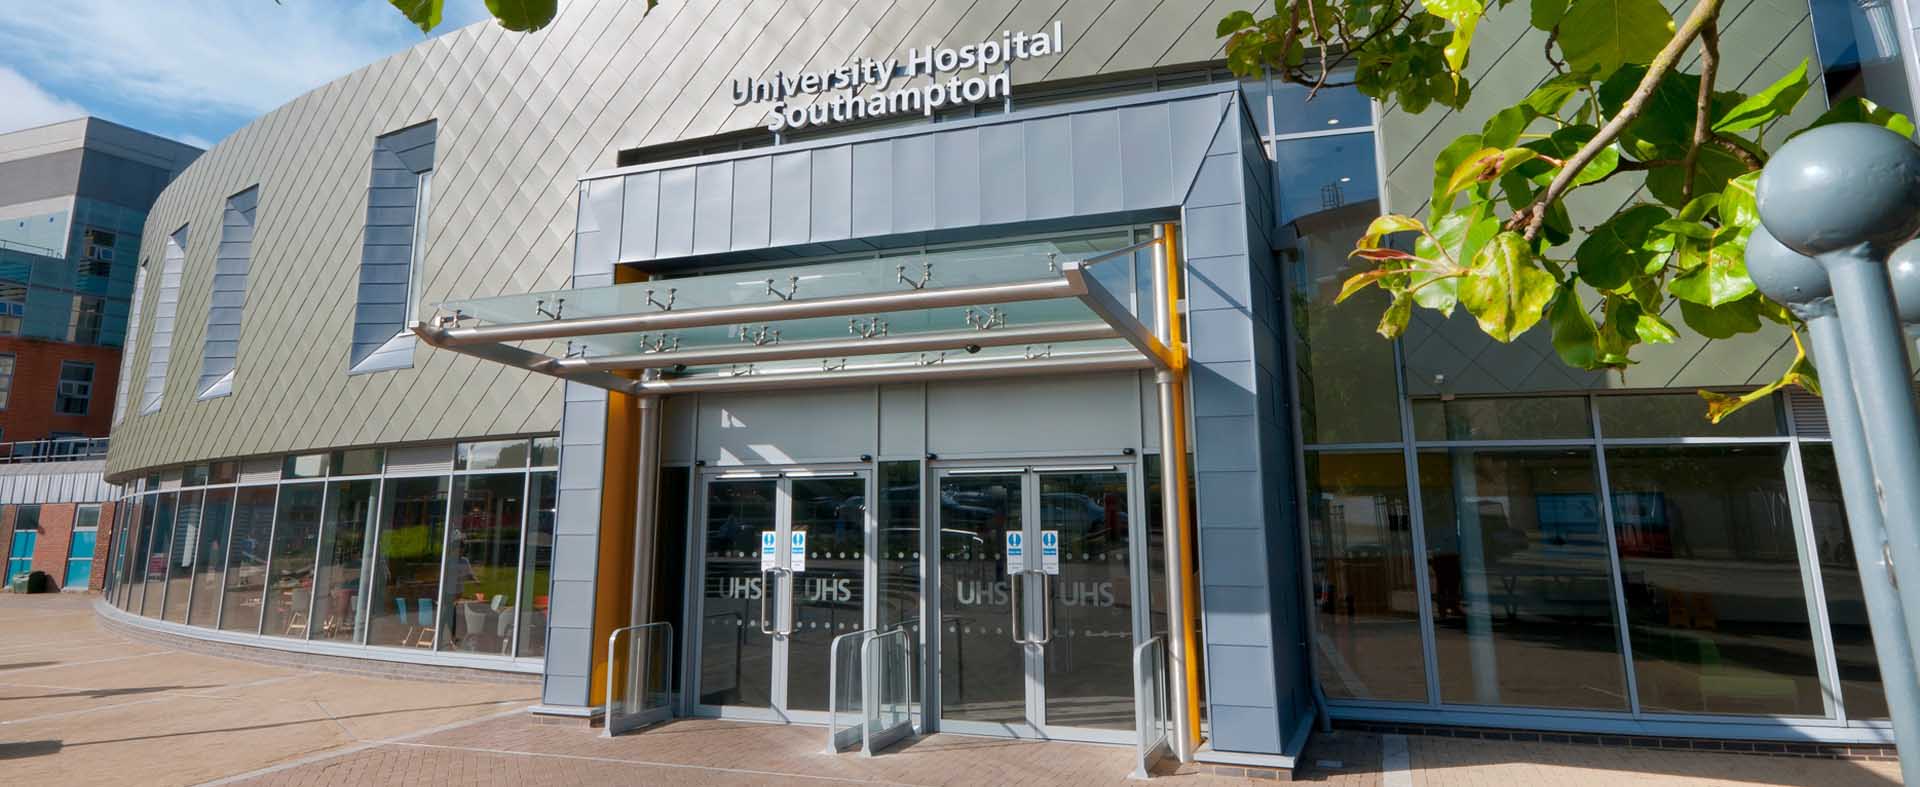 Southampton University Hospital